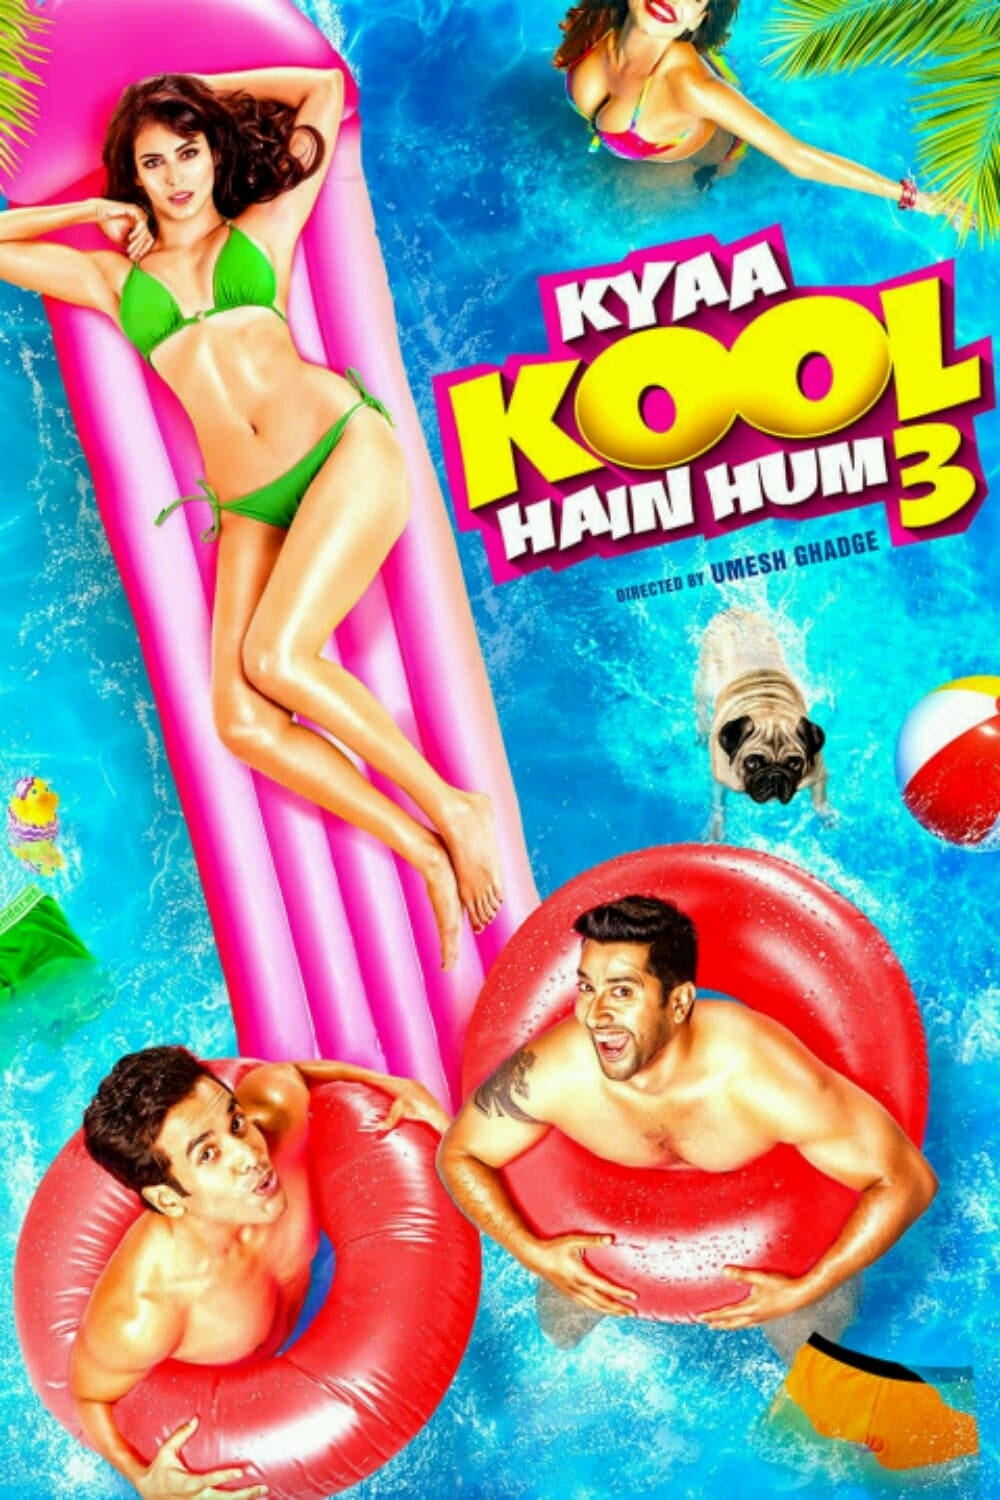 Poster for the movie "Kyaa Kool Hain Hum 3"